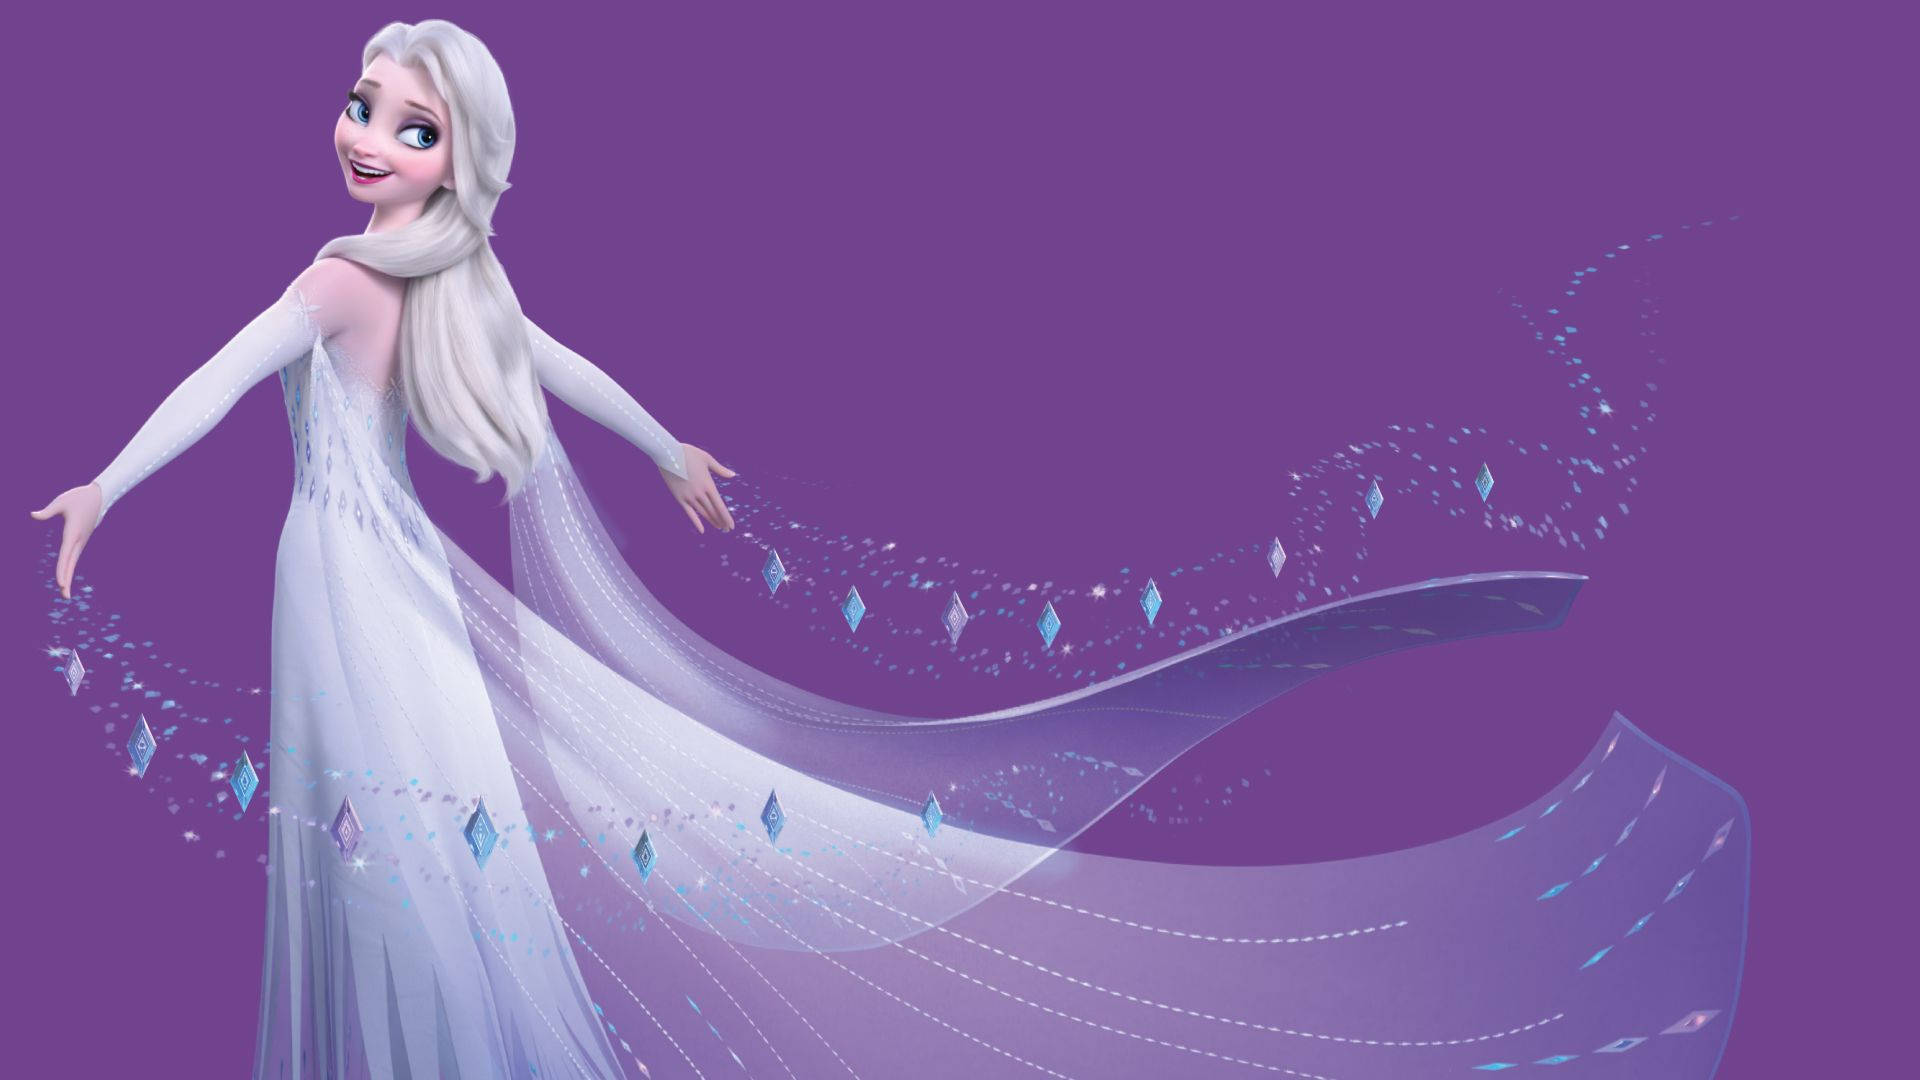 Free Elsa Frozen 2 Pictures , [100+] Elsa Frozen 2 Pictures for FREE |  